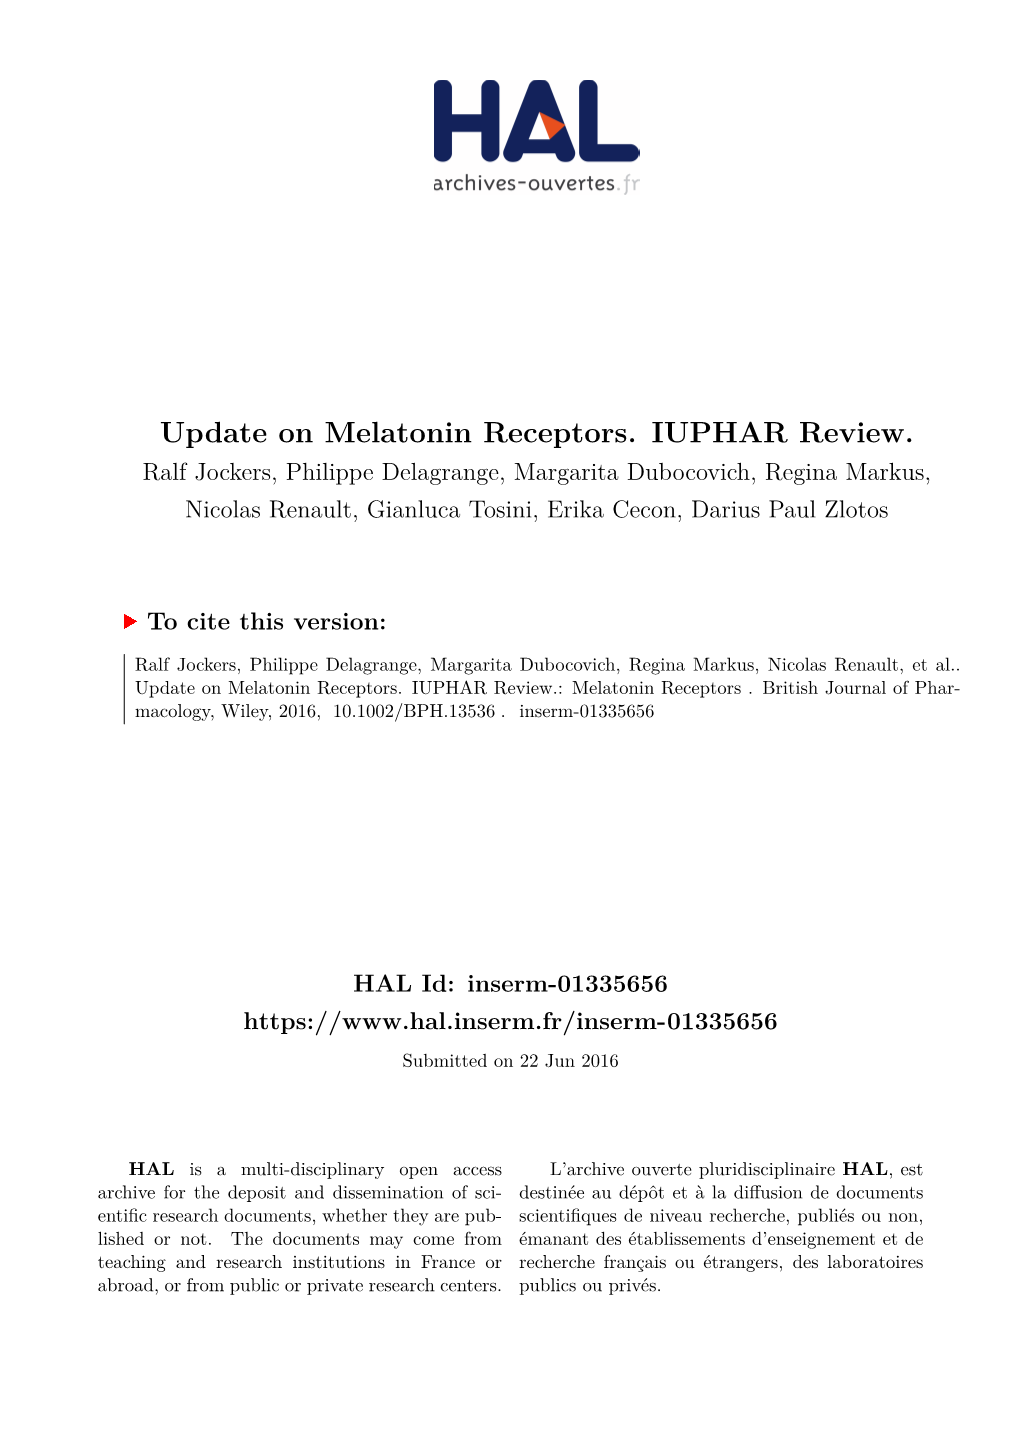 Update on Melatonin Receptors. IUPHAR Review